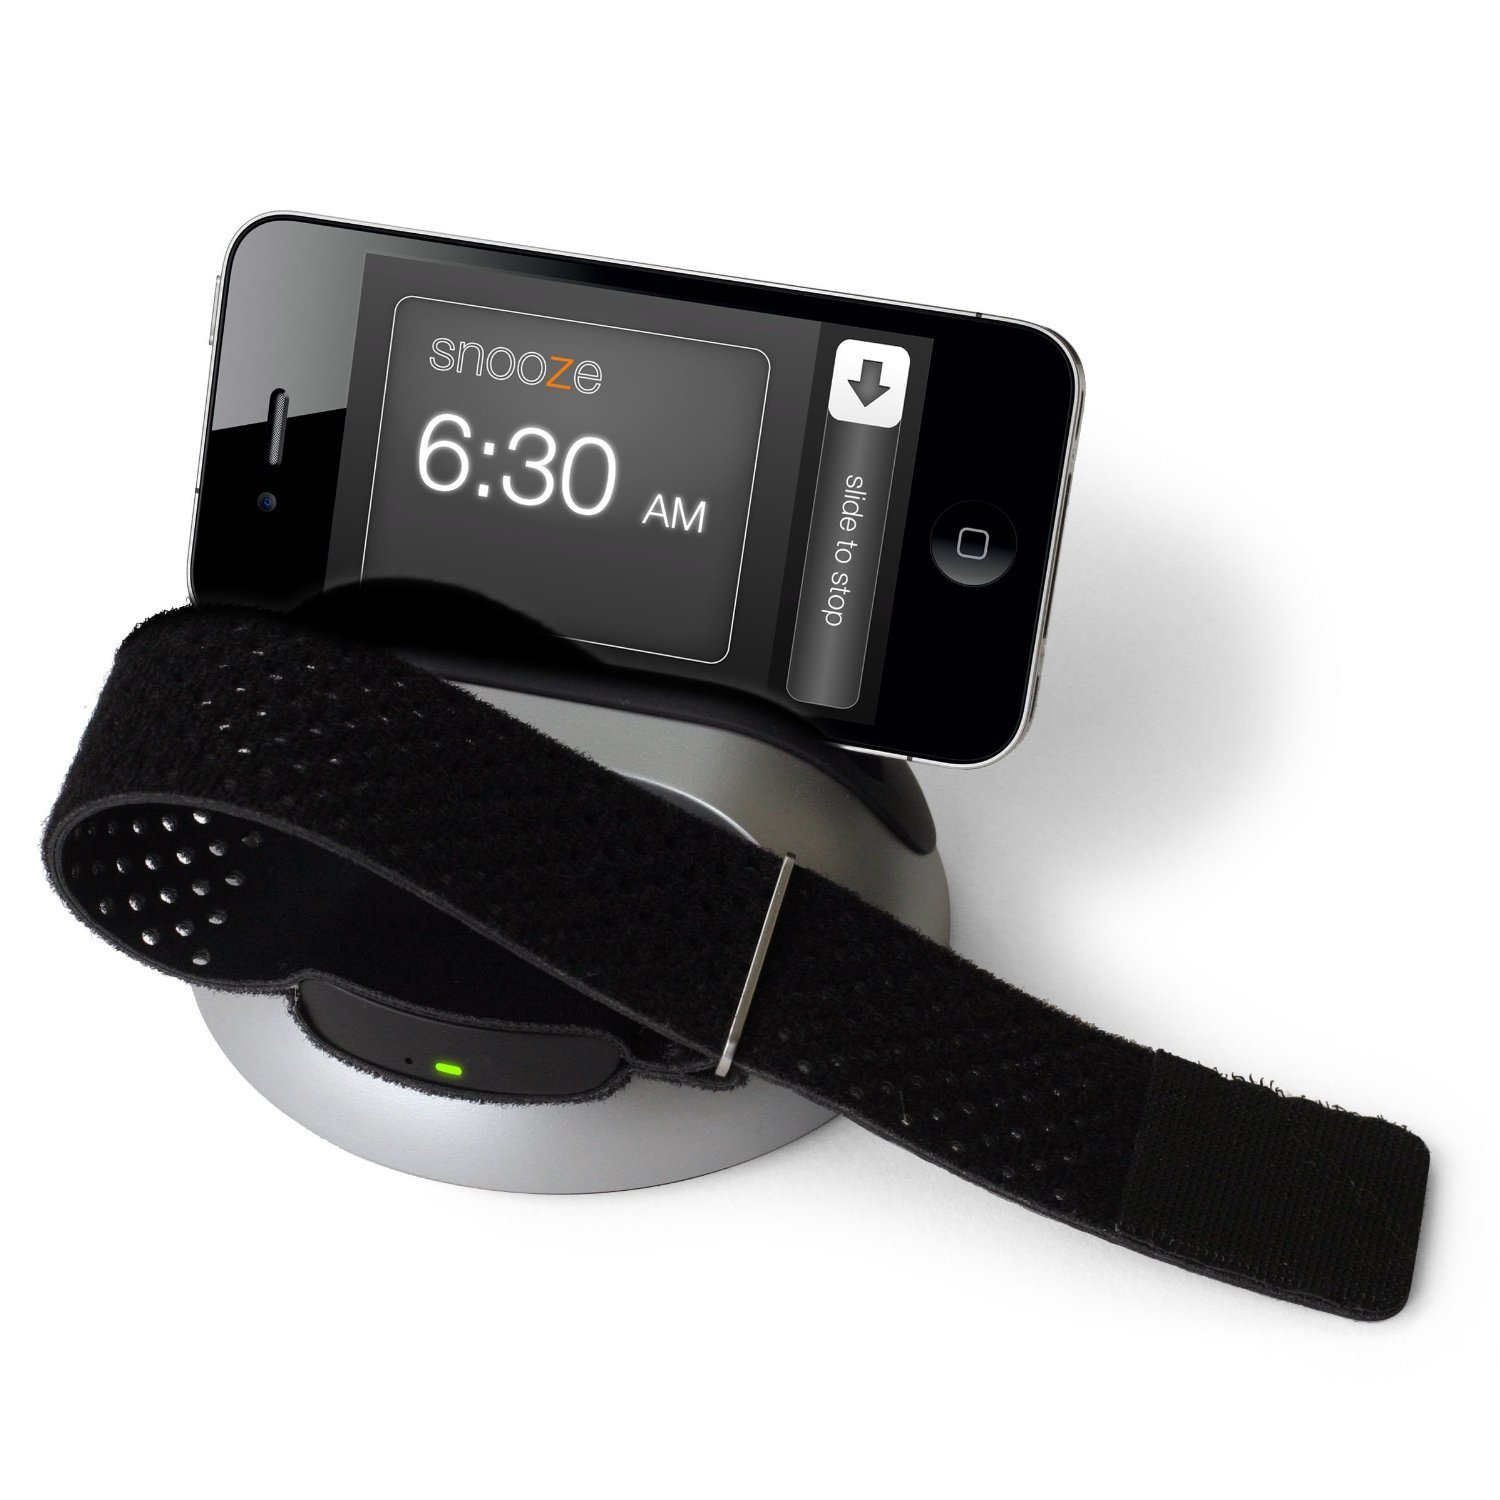 Hotels offer wearable sleep monitors